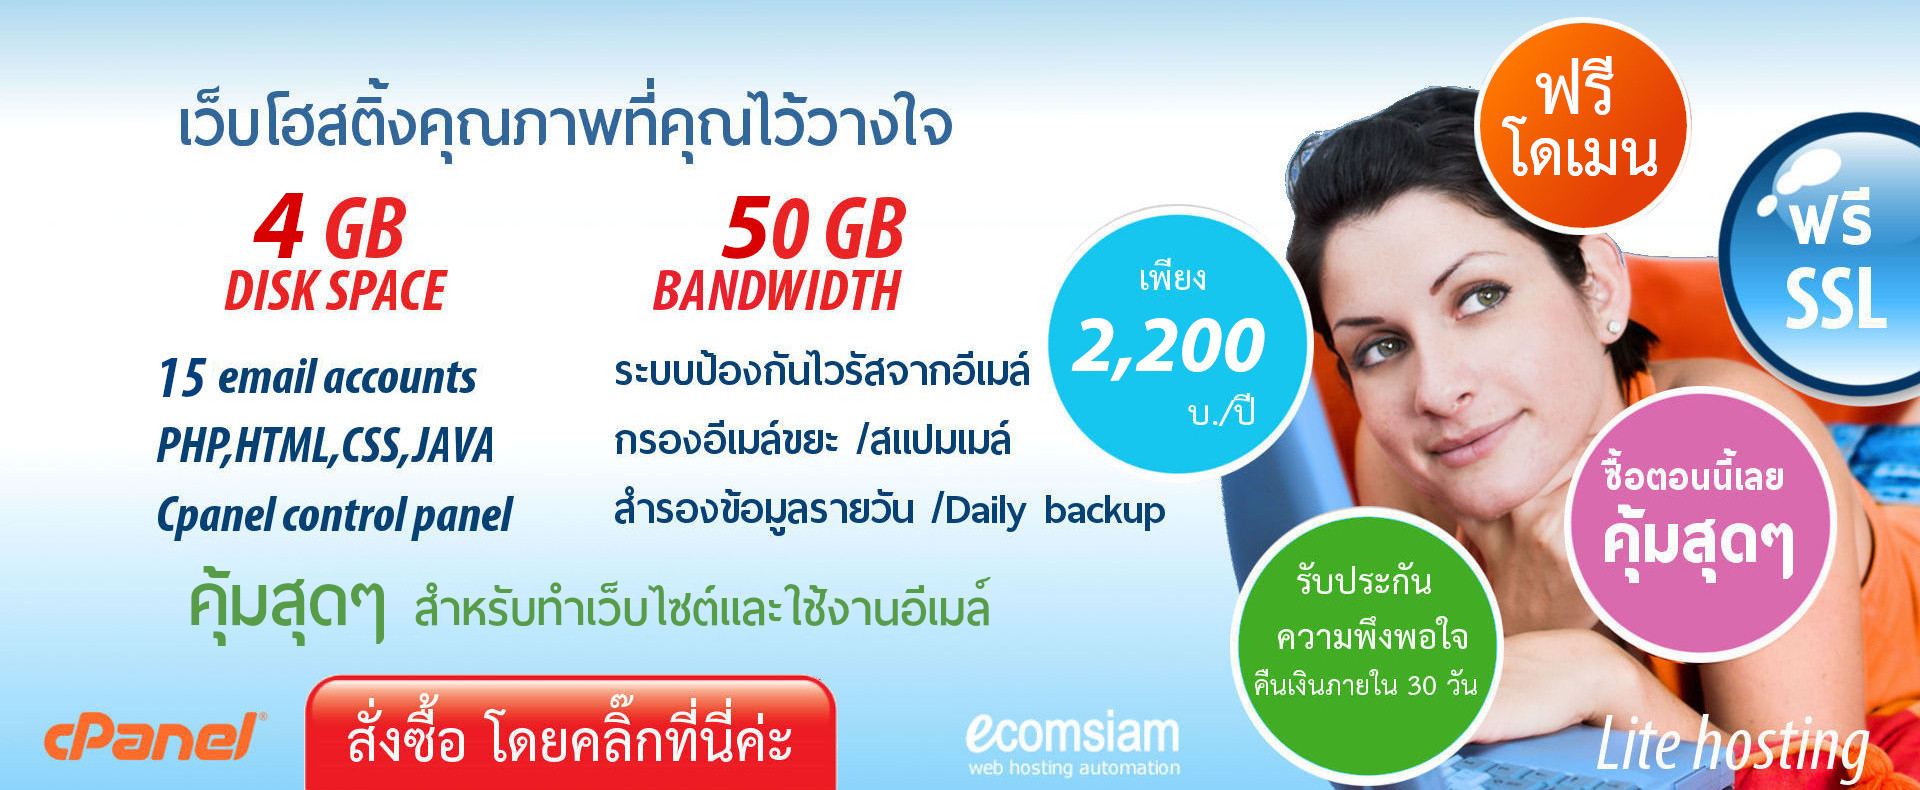 lite hosting thai ไทย - พื้นที่มากถึง 4 GB/15 email เพียง 2,200 บาทต่อปี ฟรี! โดเมน พร้อมใบรับรอง SSL